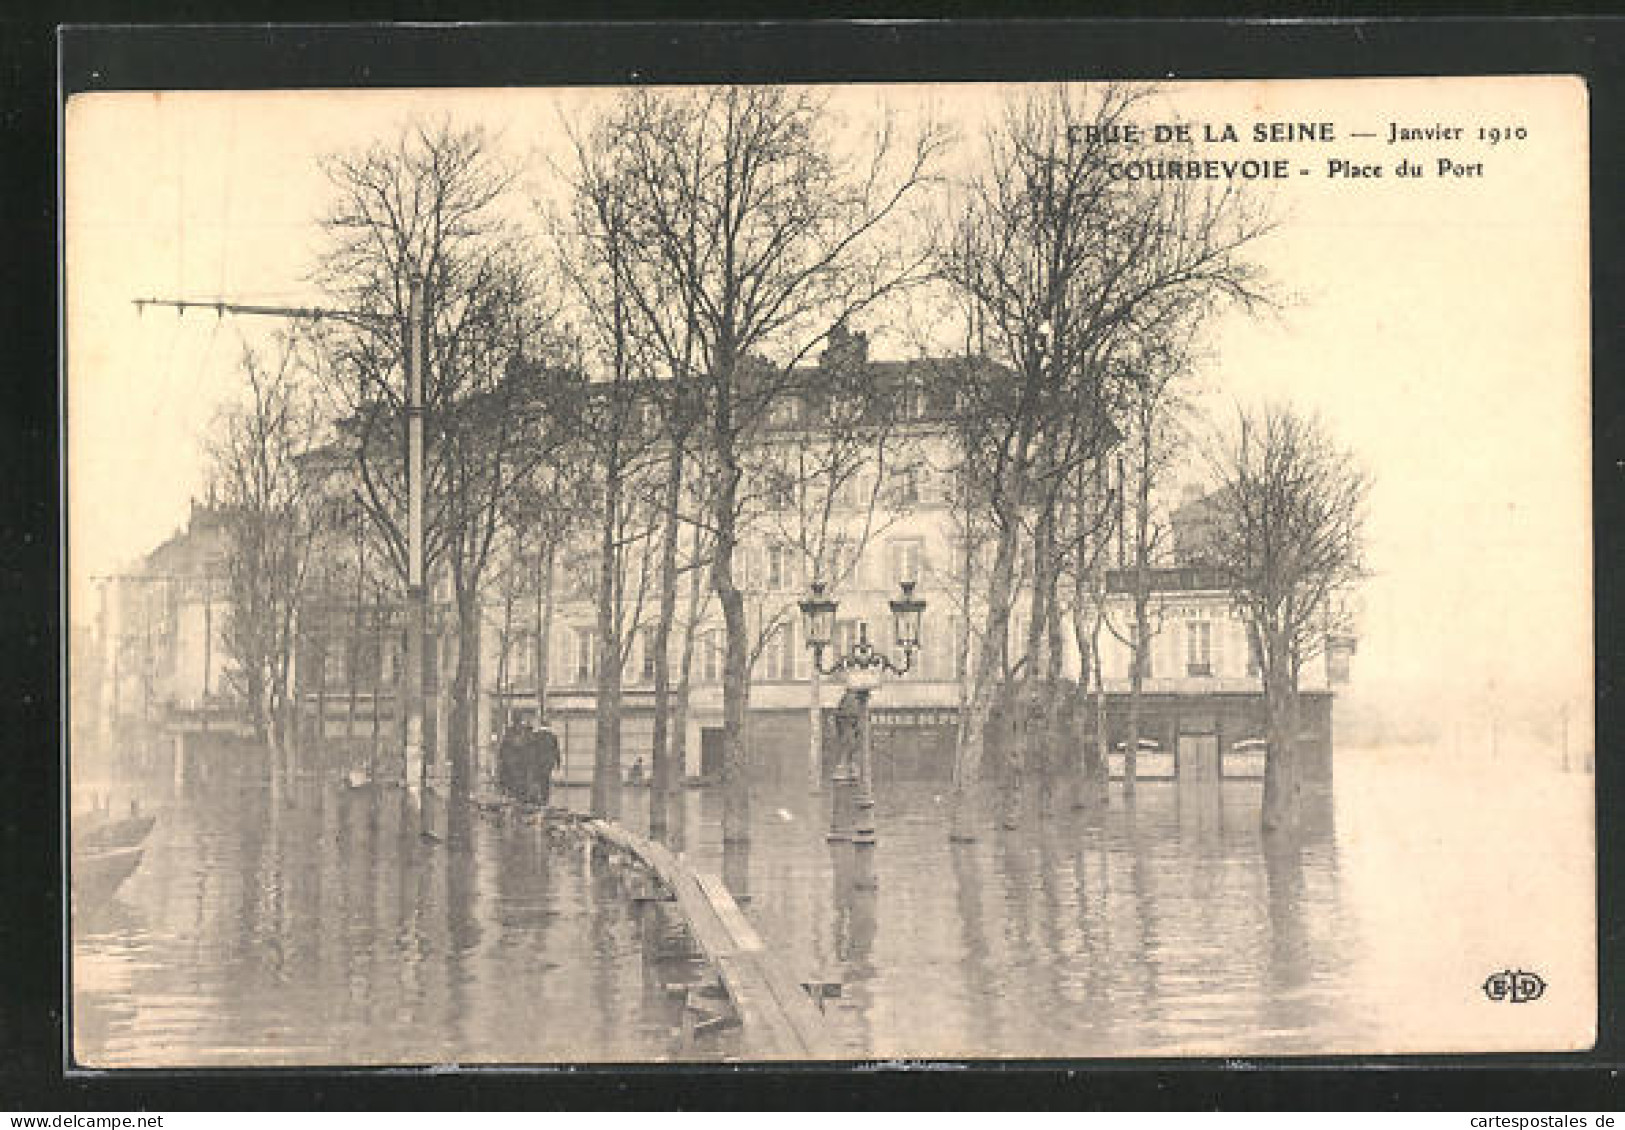 AK Crue De La Seine Janvier 1910, Courbevoie - Place Du Port, Hochwasser  - Inondations